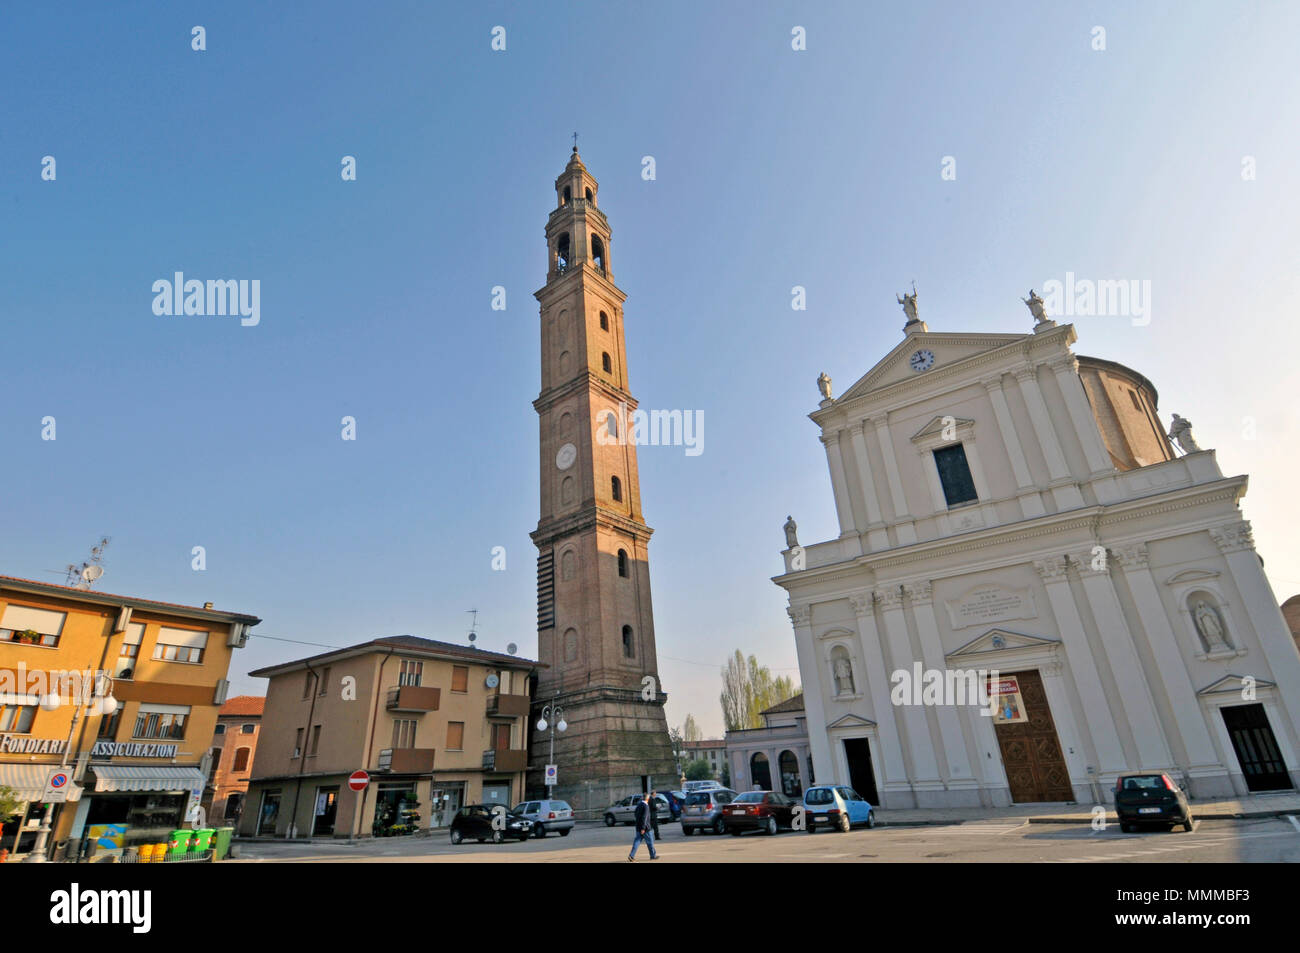 Tower and Church of St. Anthony Martyr, Piazza Guglielmo Marconi, Ficarolo, Rovigo, Italy Stock Photo